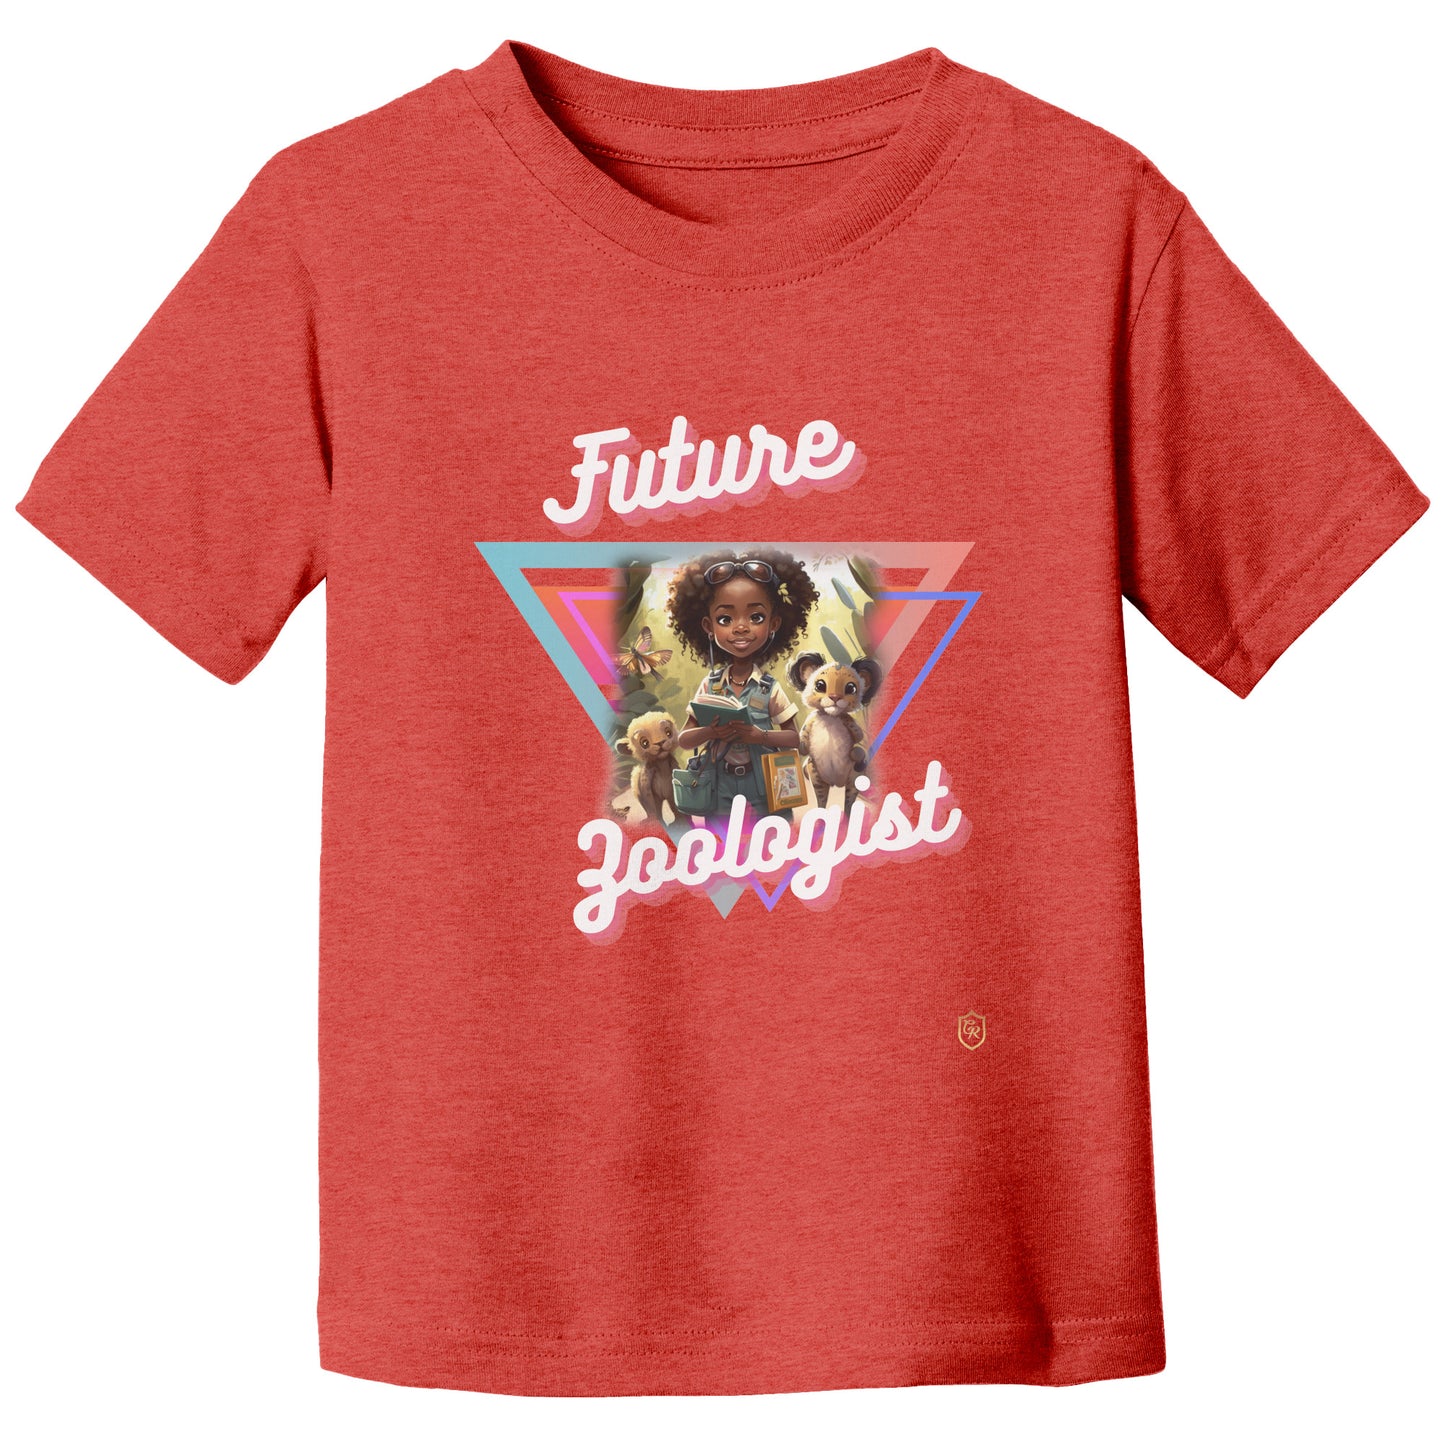 Girl's Future Zoologist T-shirt